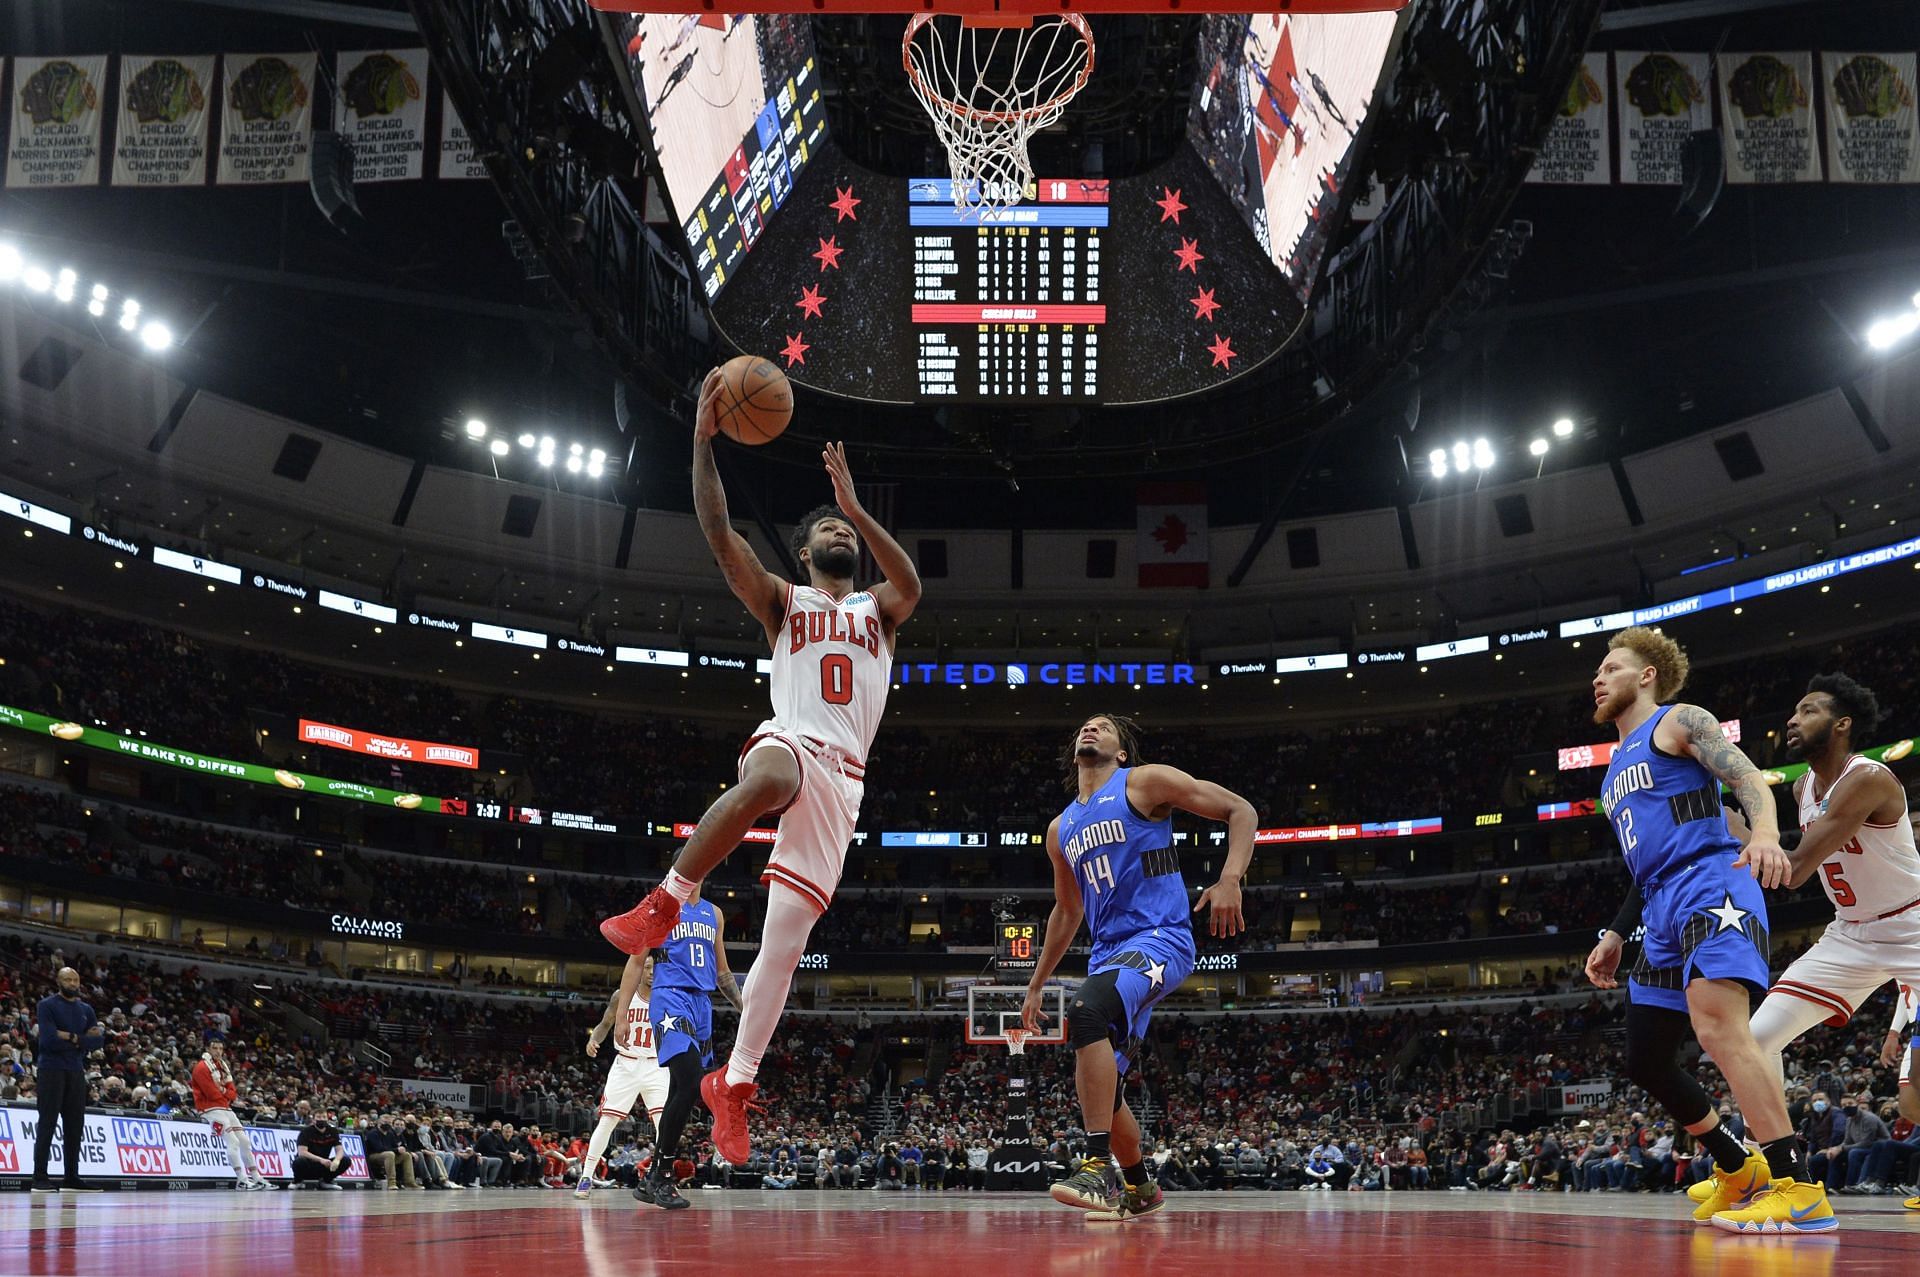 Orlando Magic will host the Chicago Bulls on Sunday